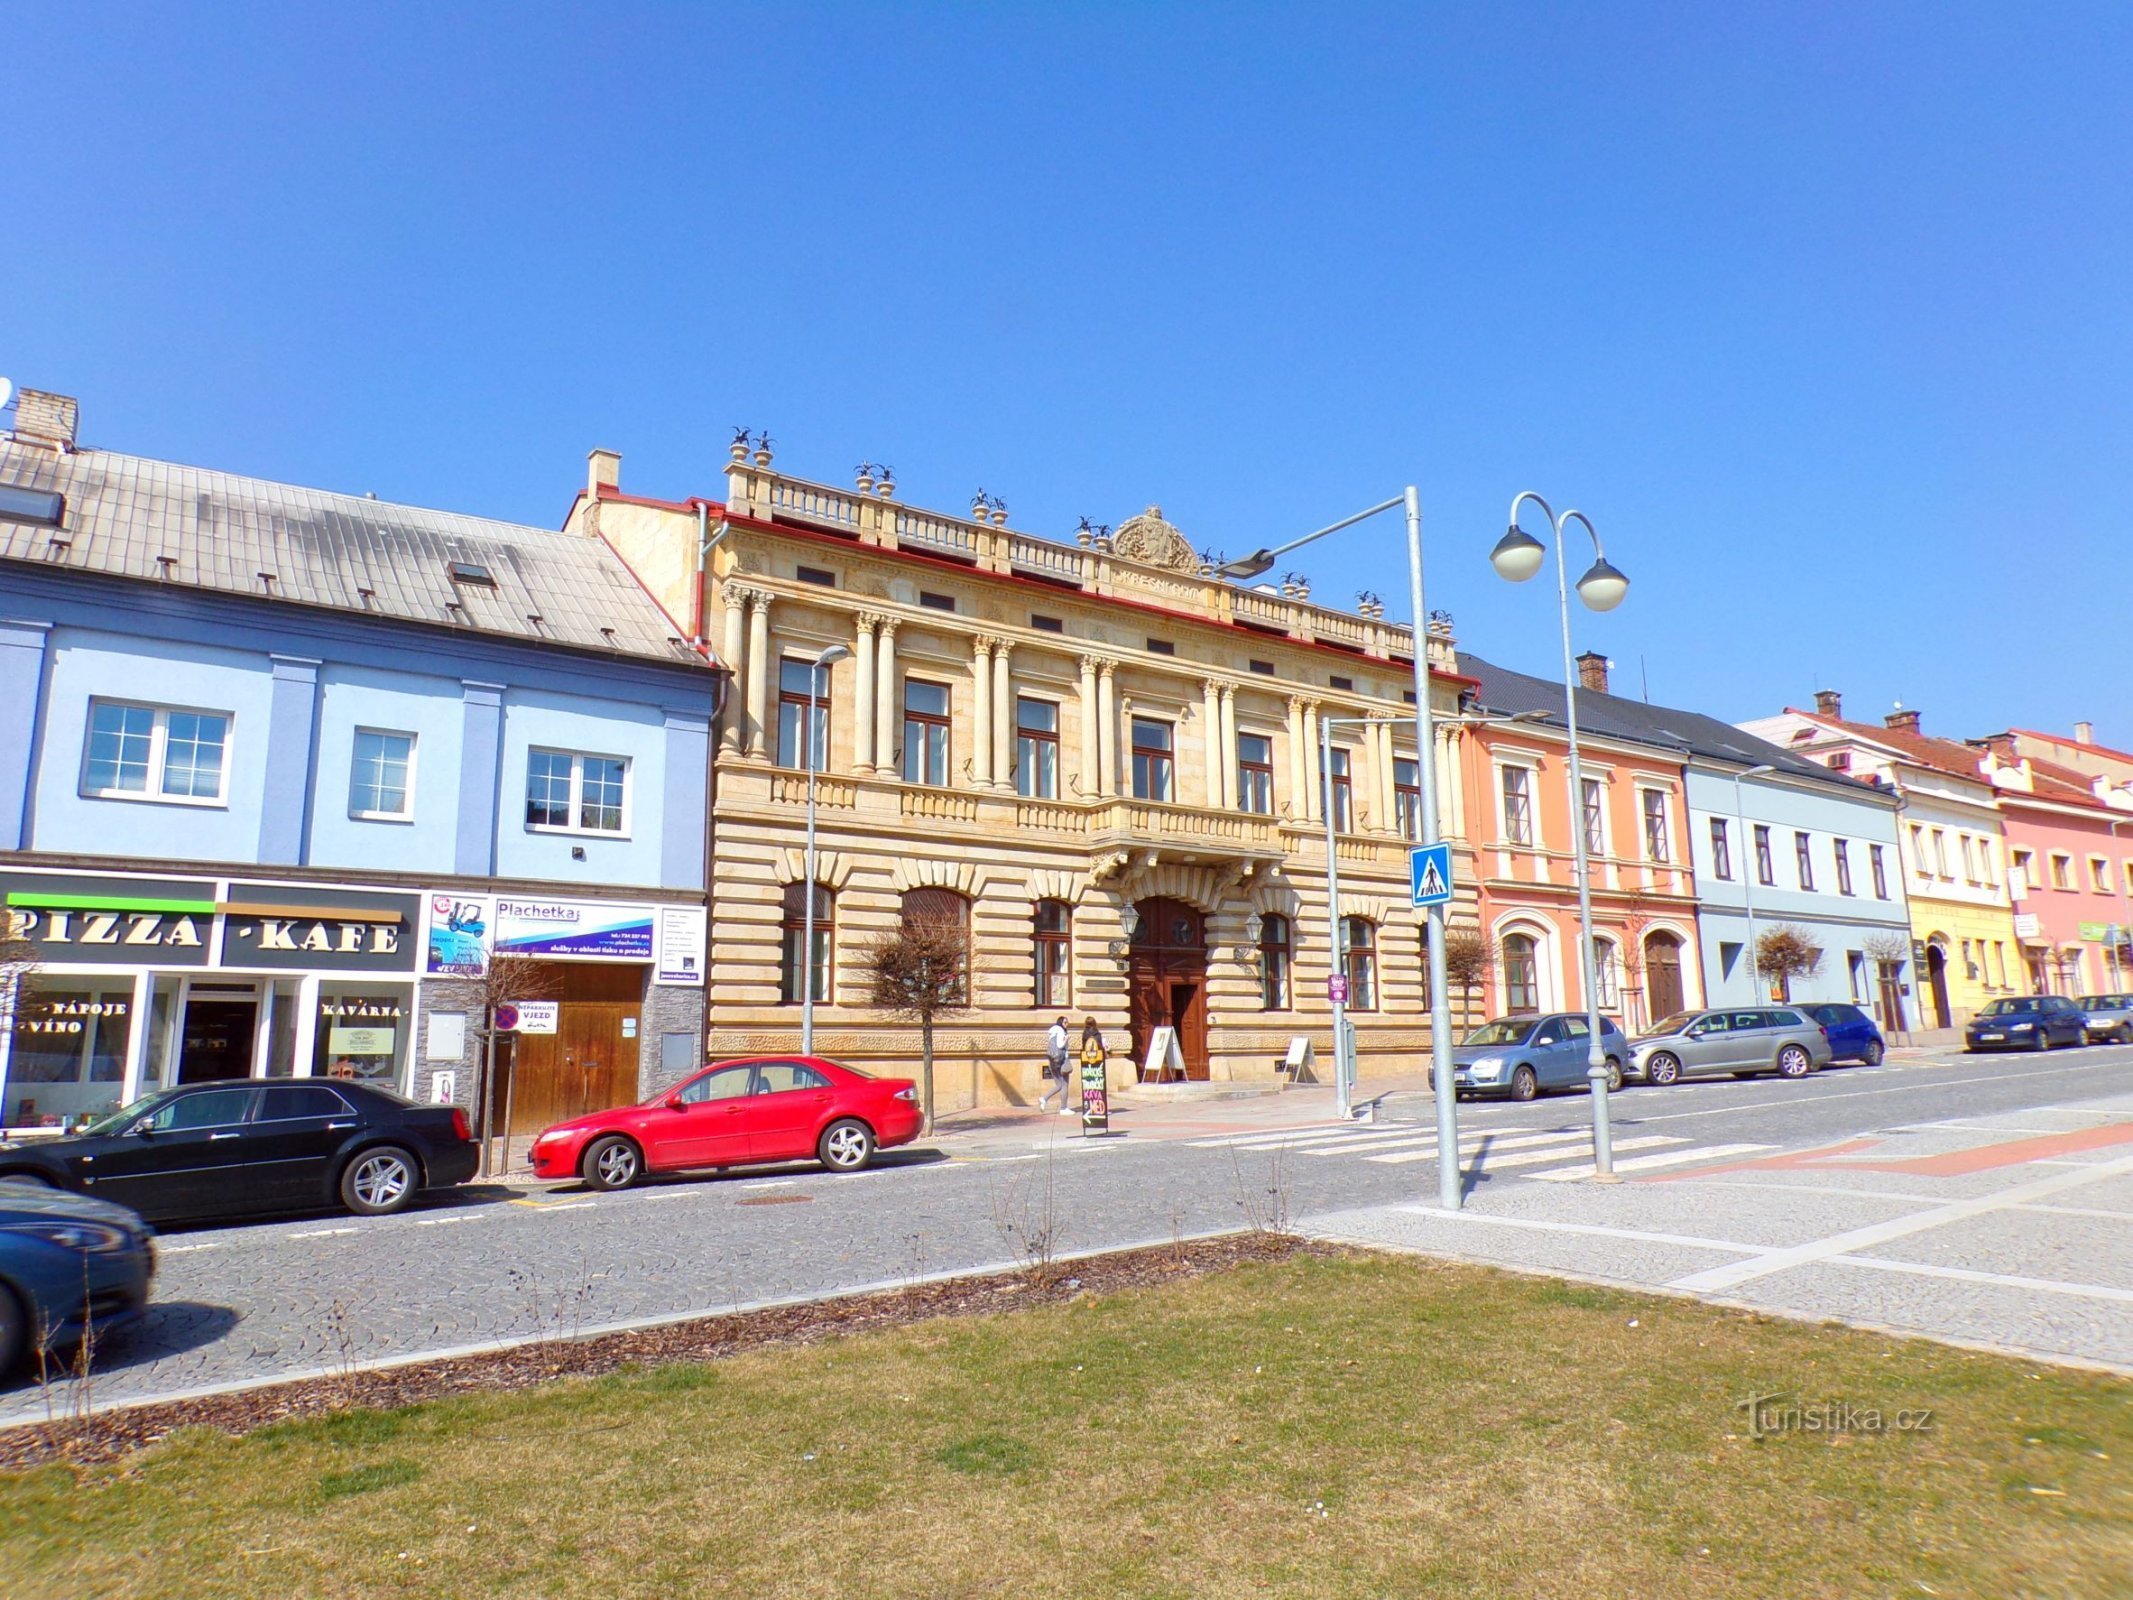 Casa del distrito (Hořice, 25.3.2022/XNUMX/XNUMX)